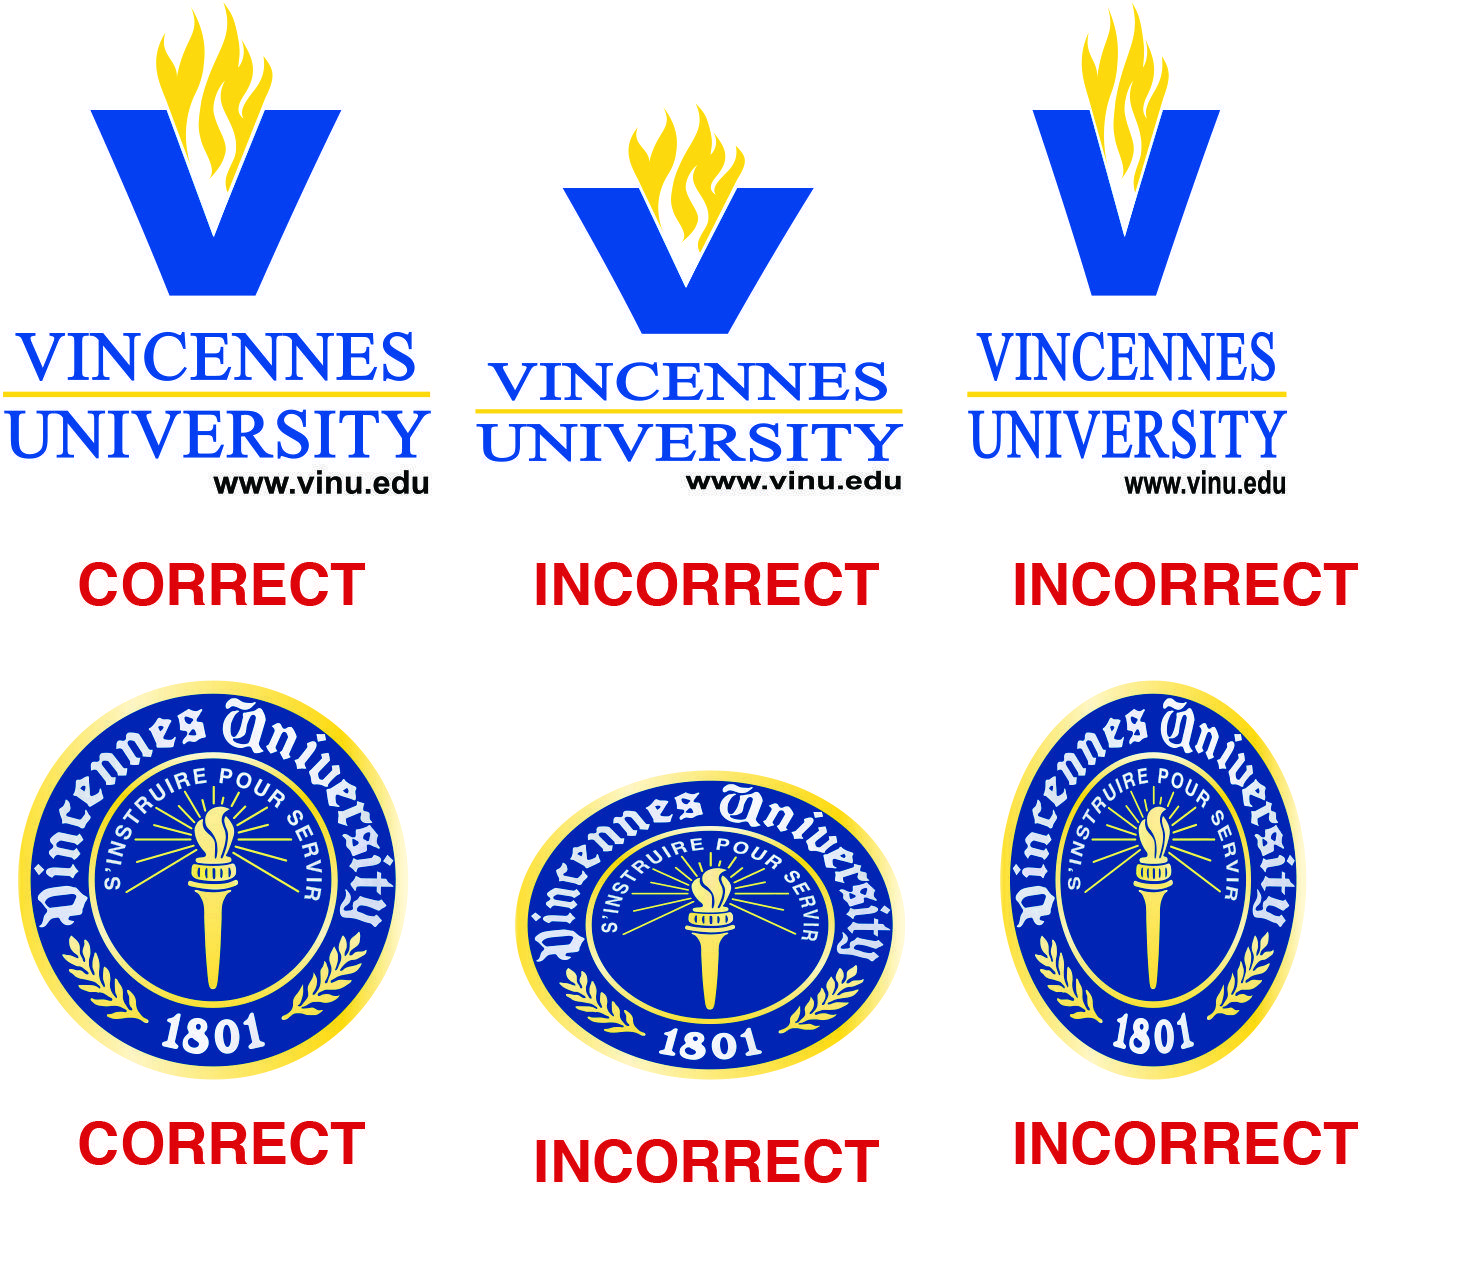 Vincennes Logo - University Logos - External Relations - Vincennes University